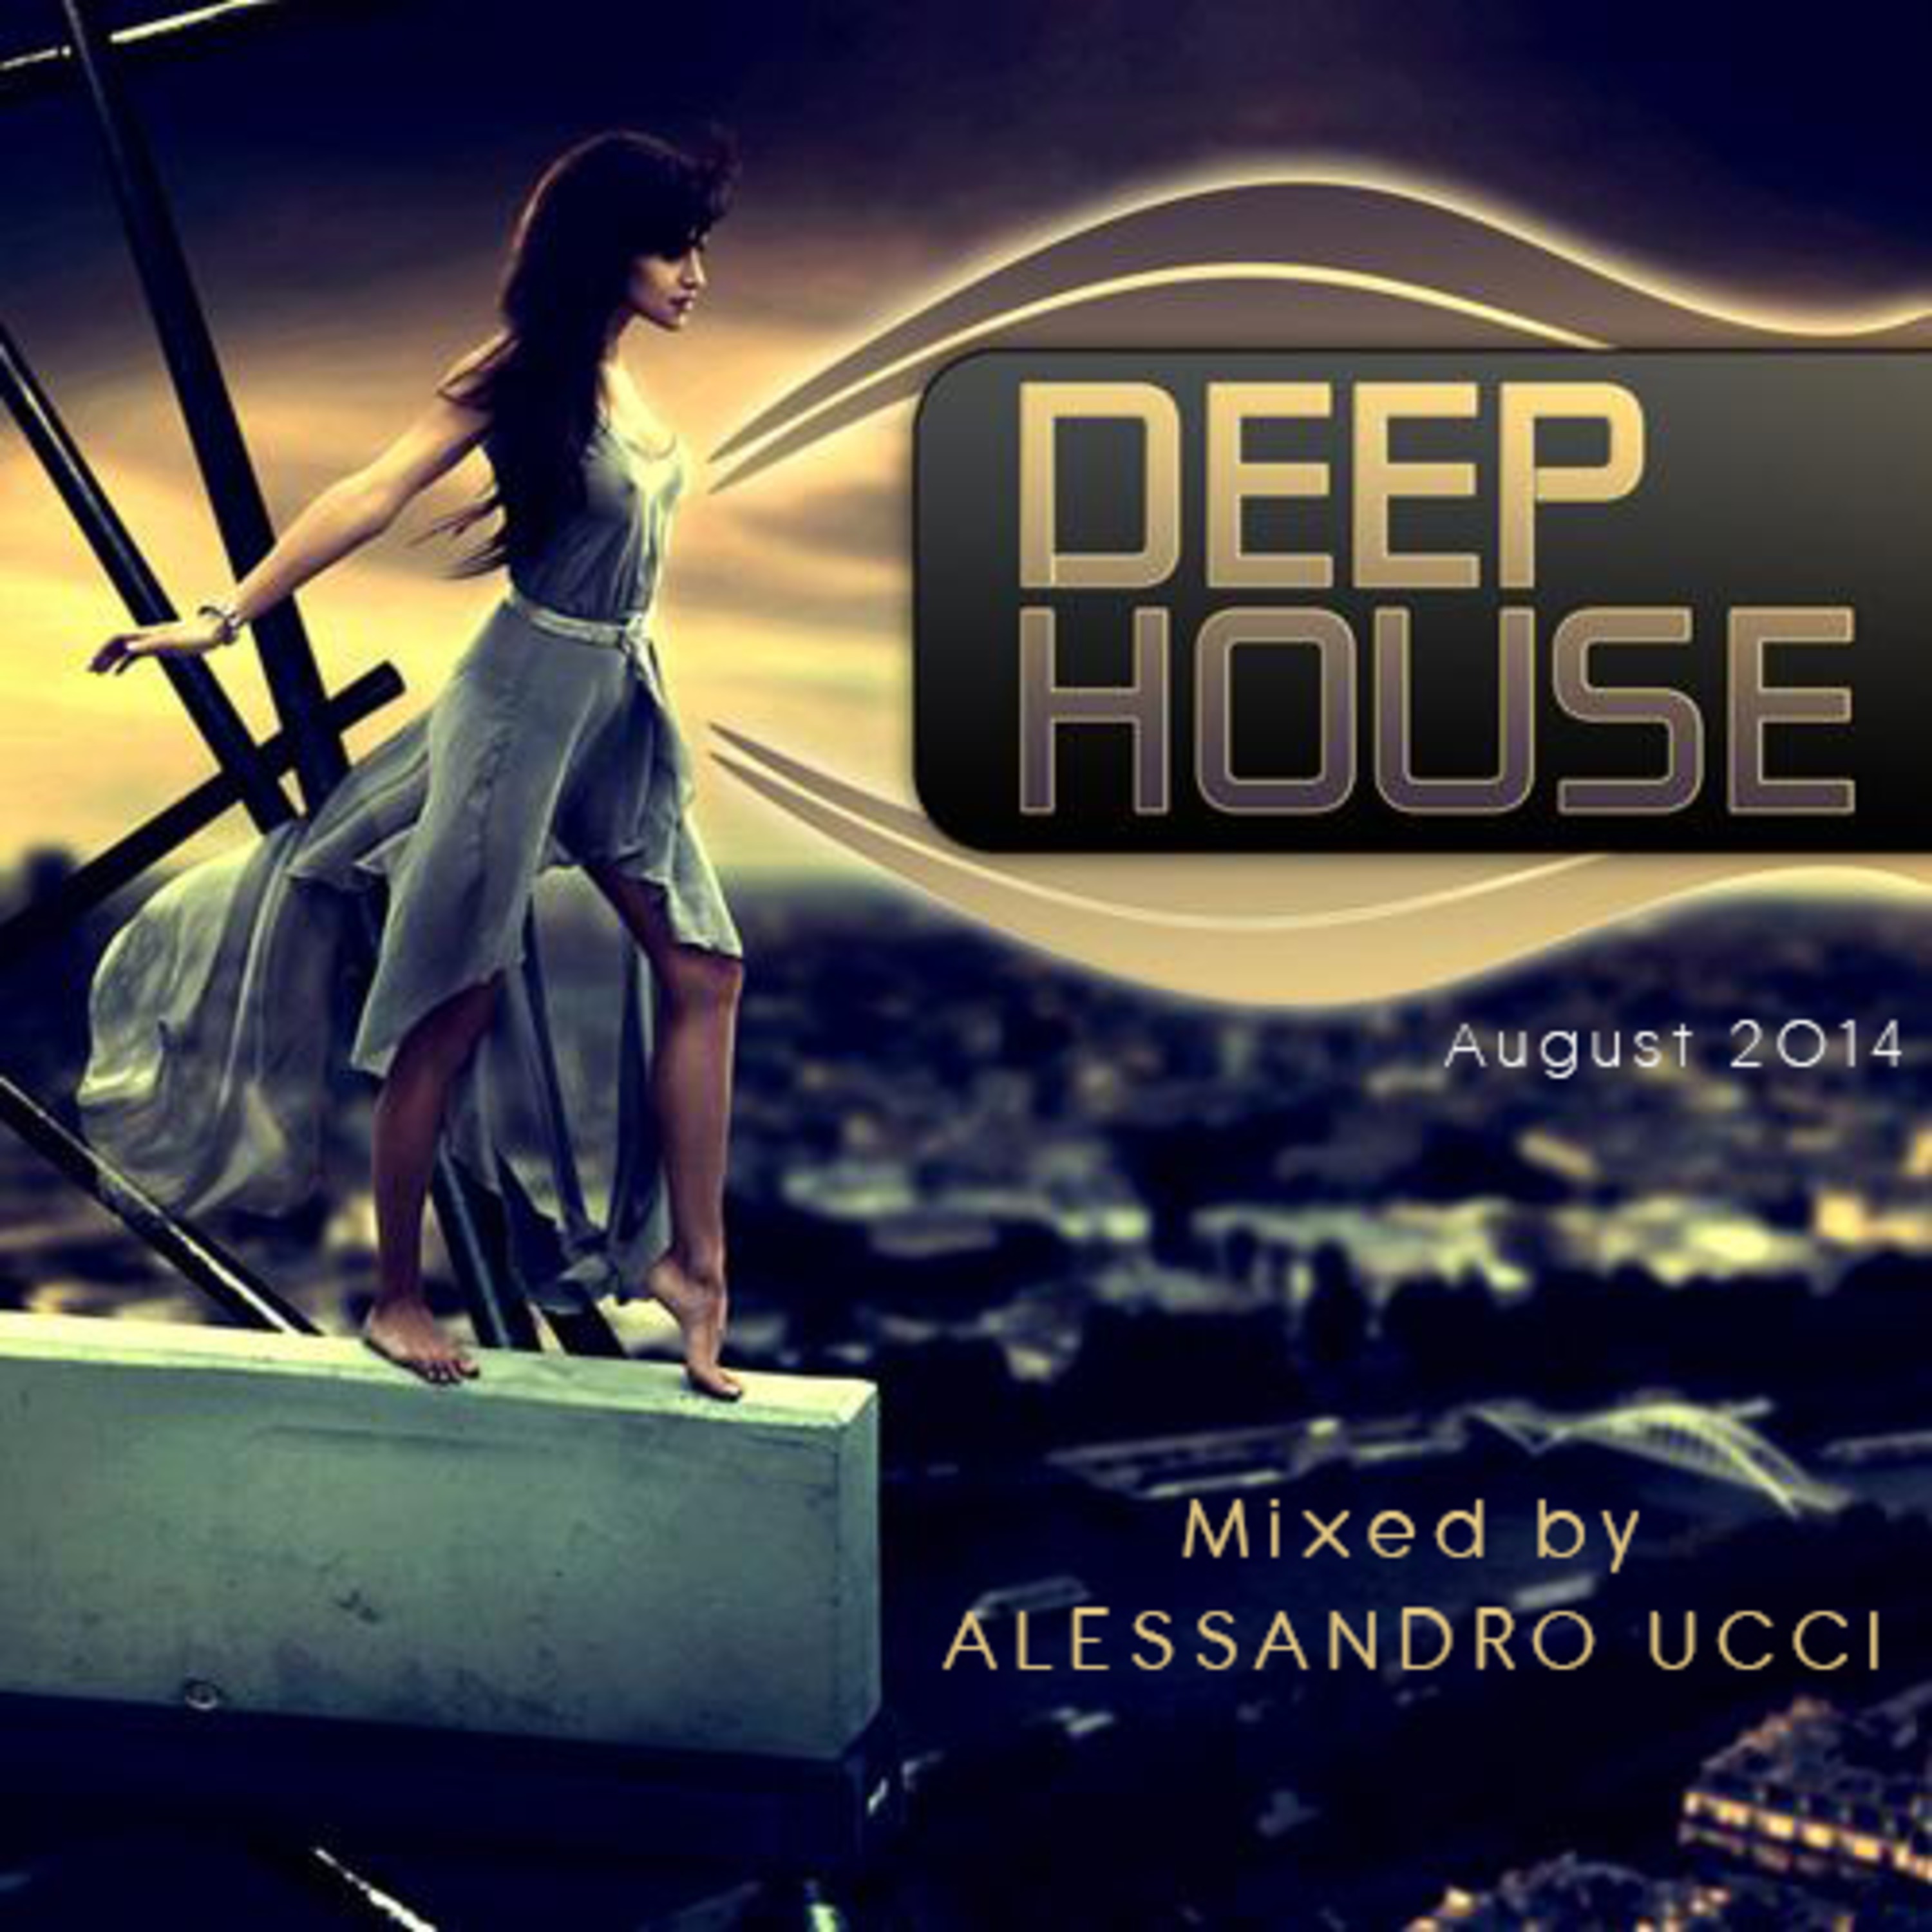 Deep haus. Deep House. Deep House обложка альбома. Красивая обложка дип Хаус. Картинки Deep House.